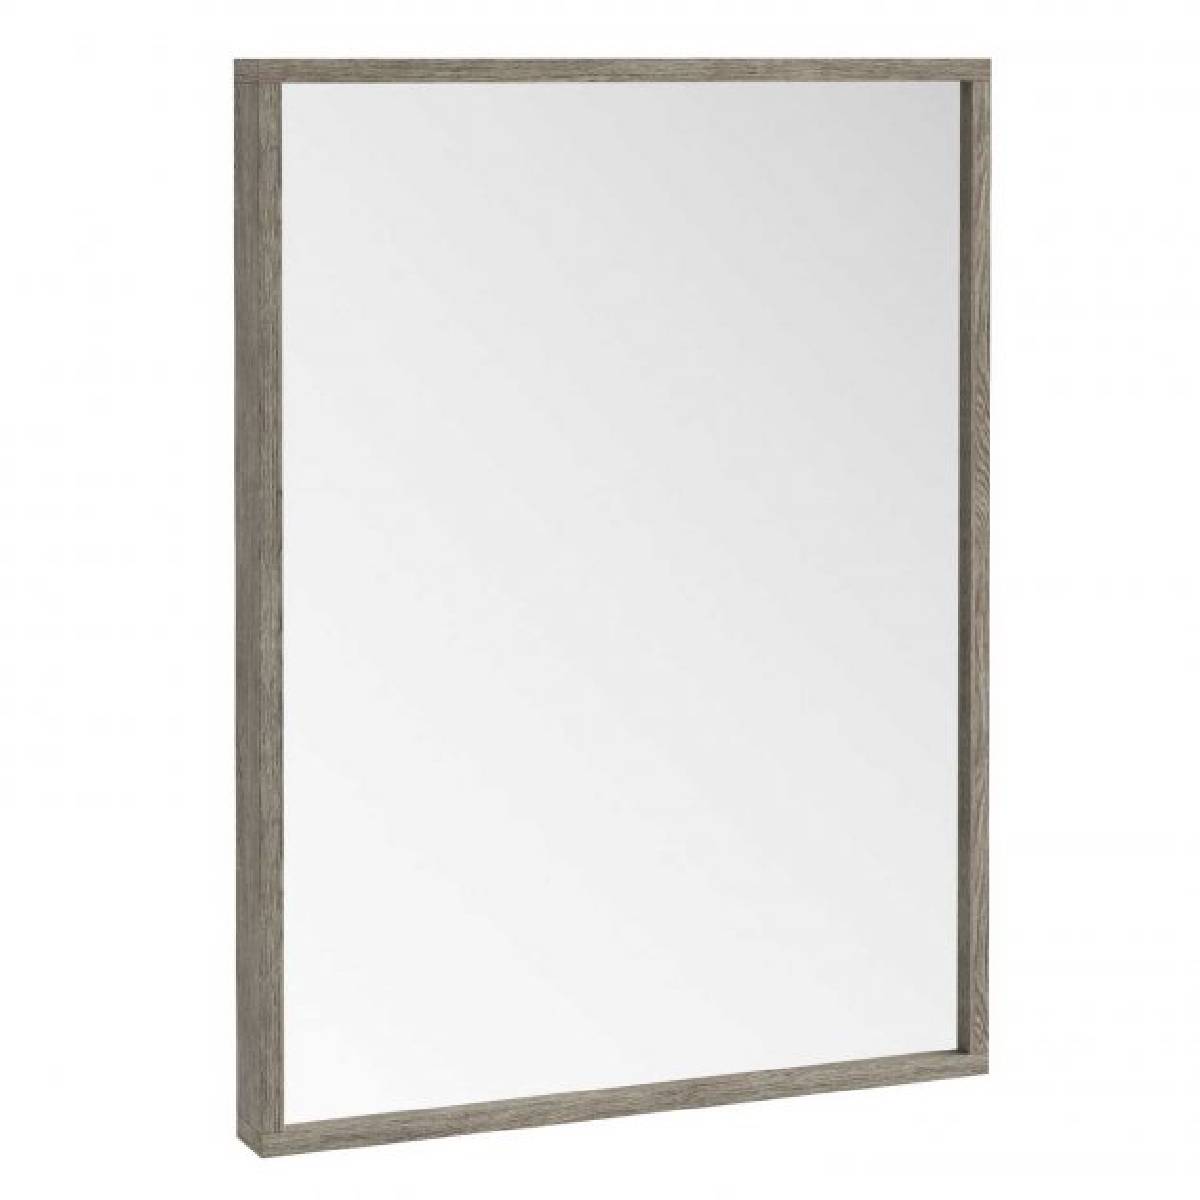 Ambience 600 x 800mm Simplistic Mirror - Grey Oak (13153)